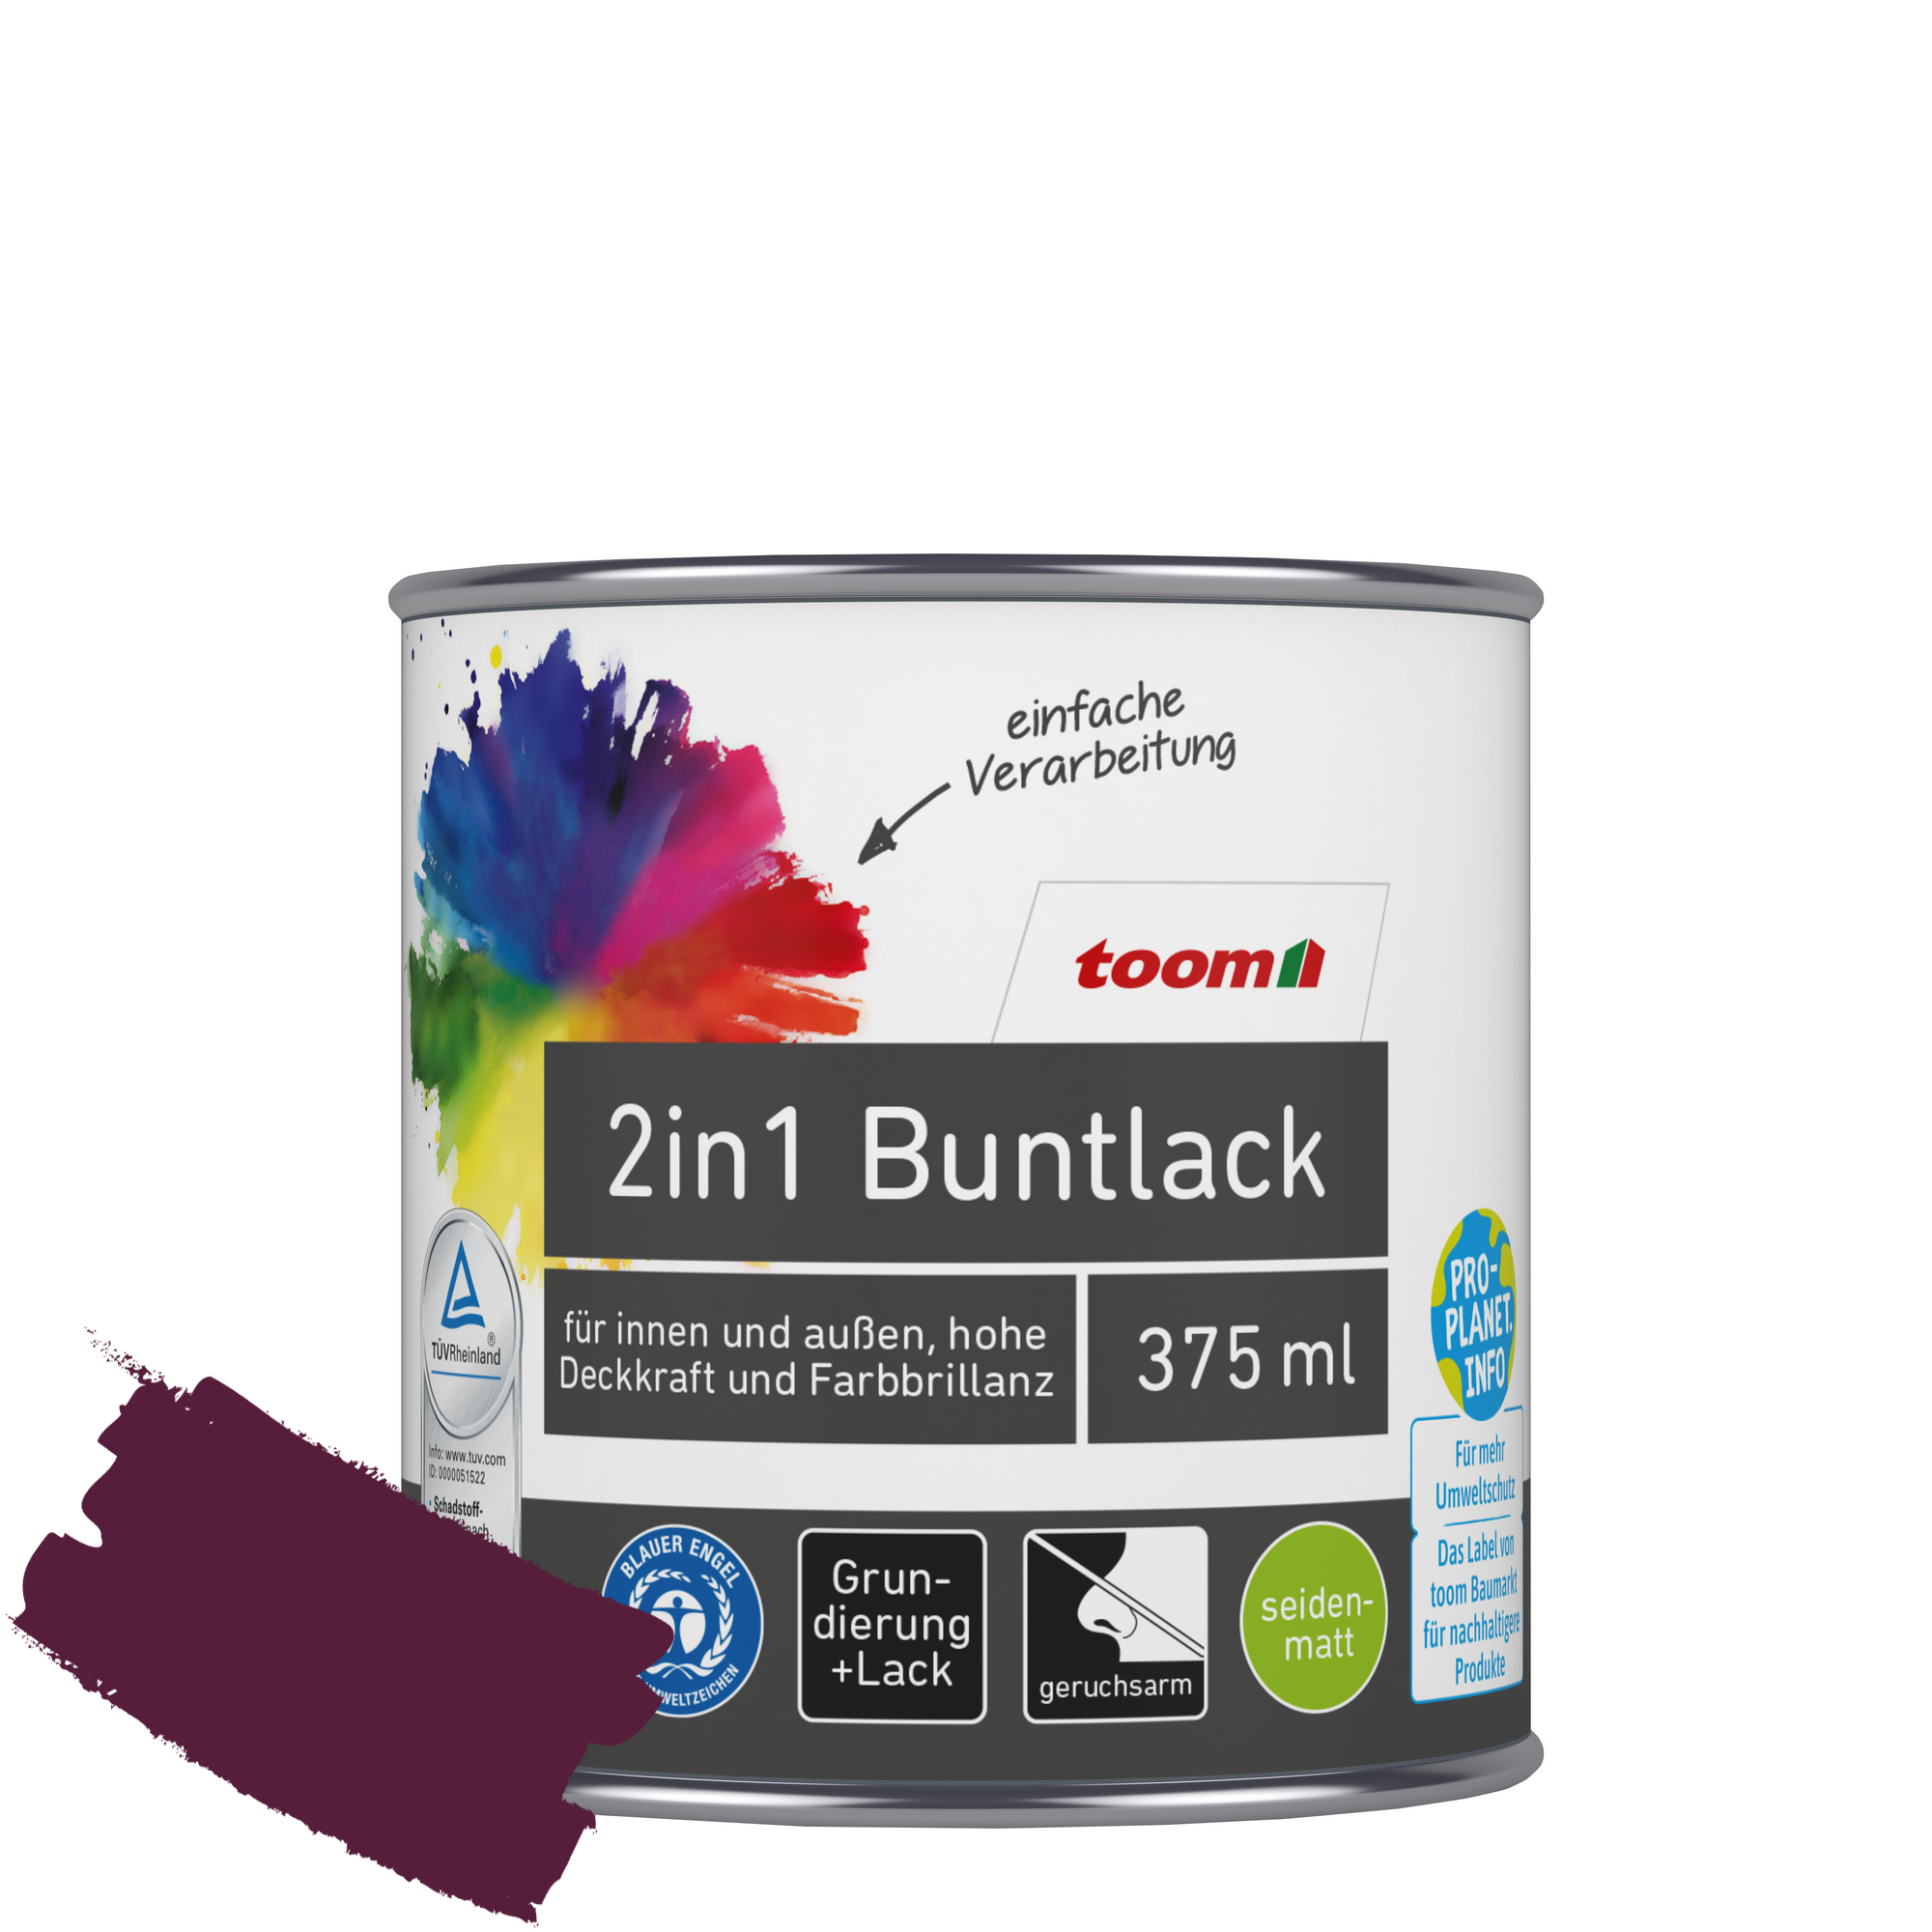 2in1 Buntlack merlotfarben seidenmatt 375 ml + product picture